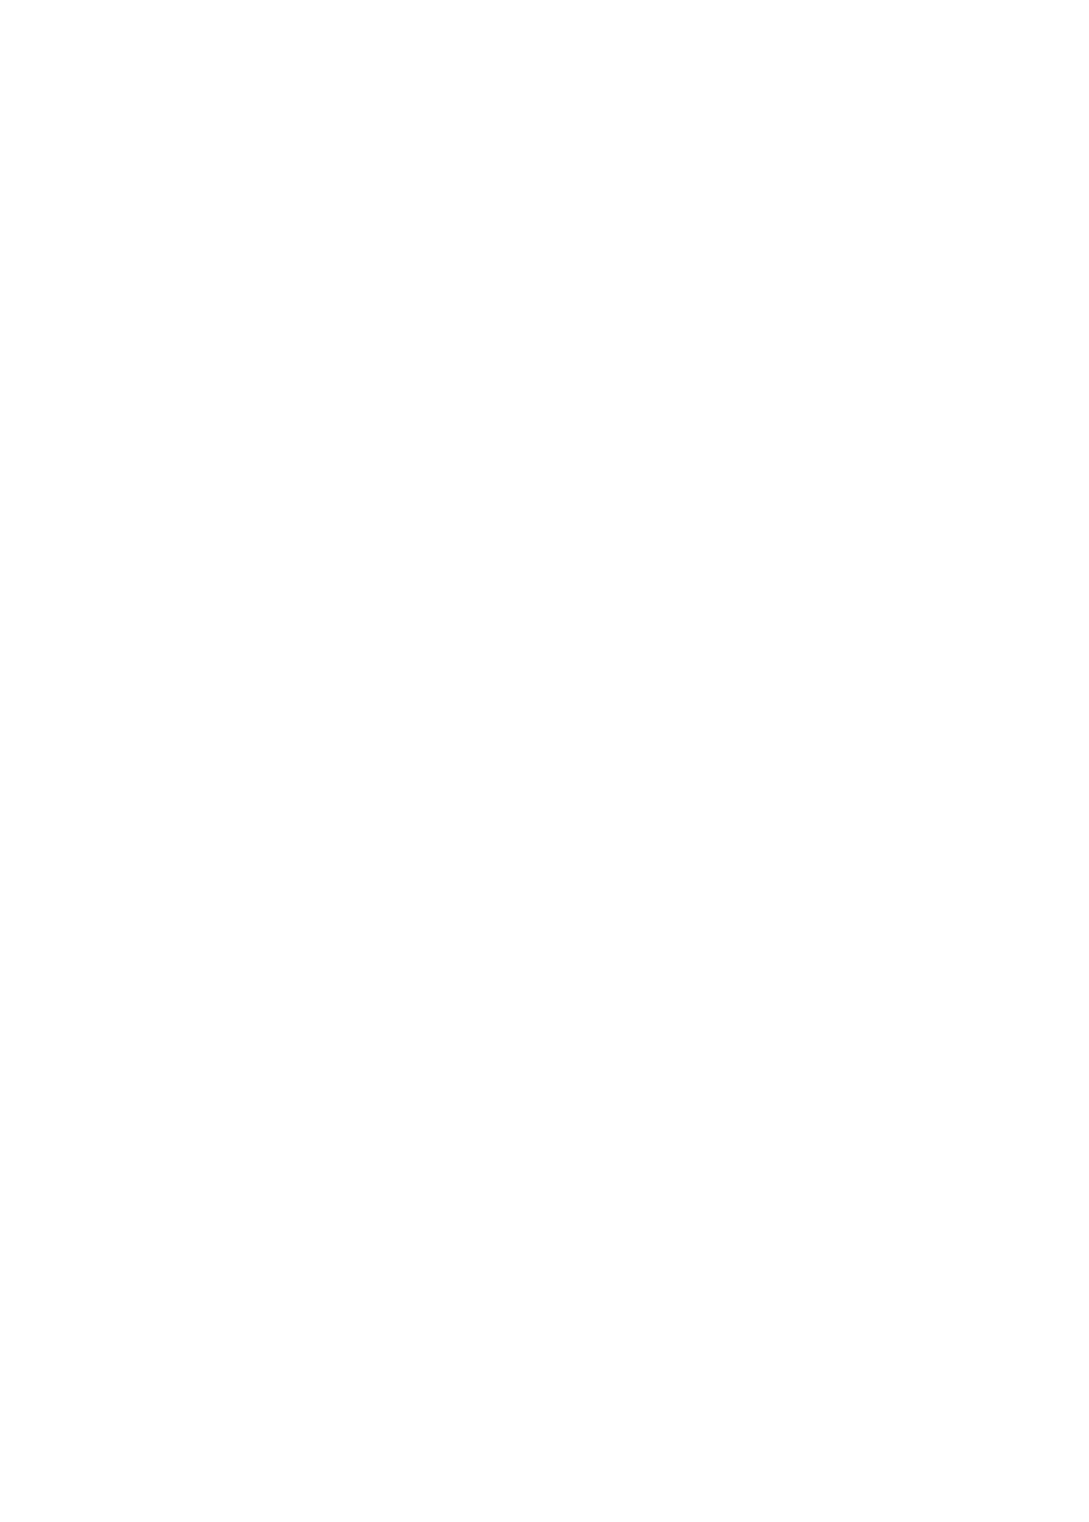 Pandora logo pour fonds sombres (PNG transparent)